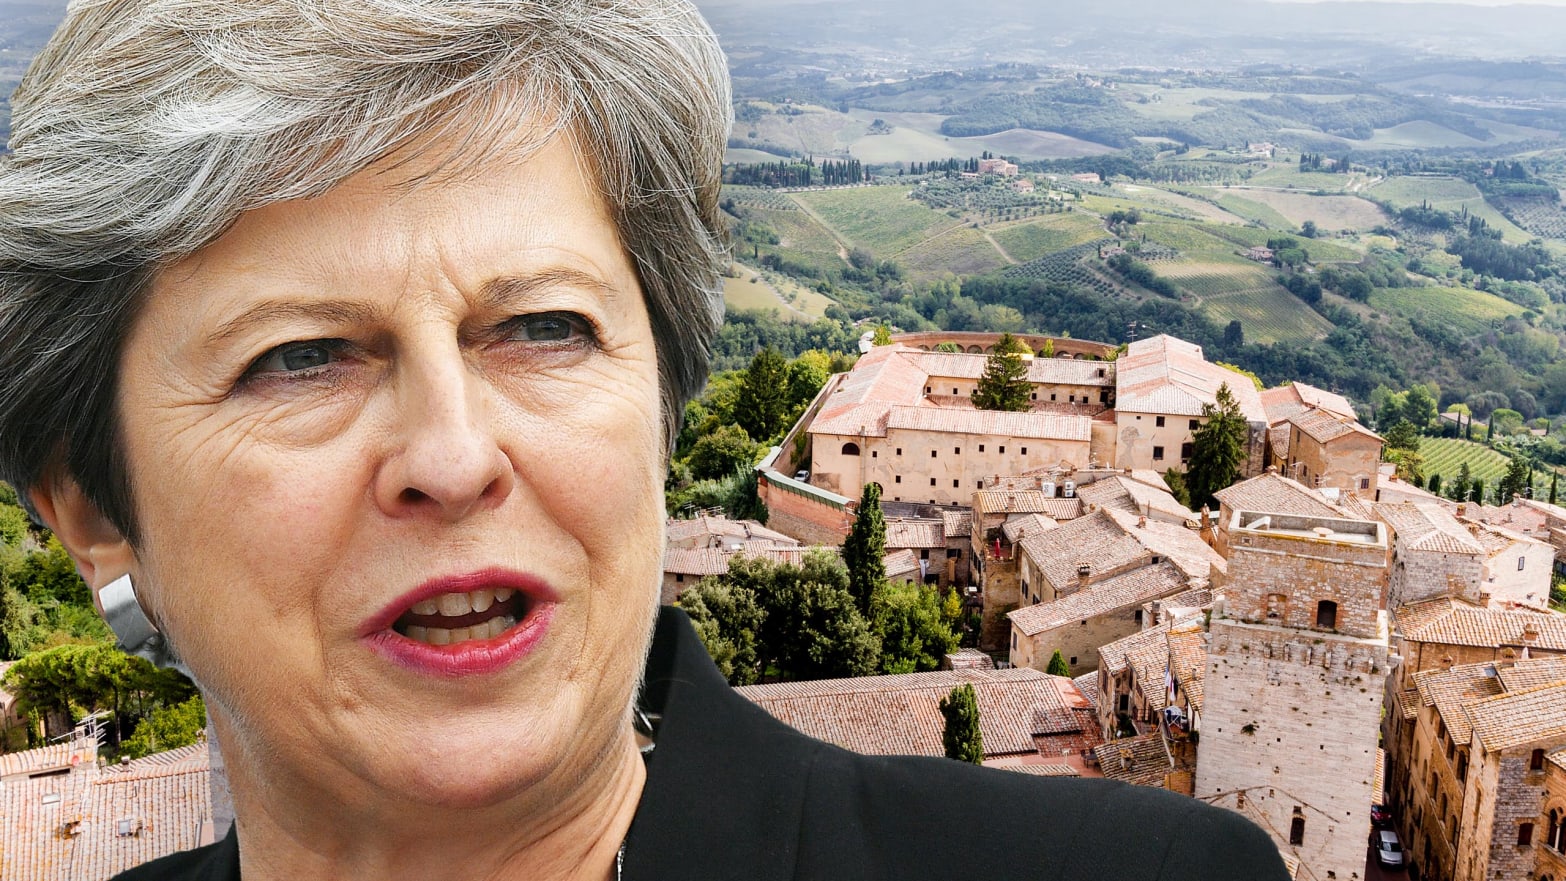 Theresa May's Killjoy Grand Tour in Tuscany